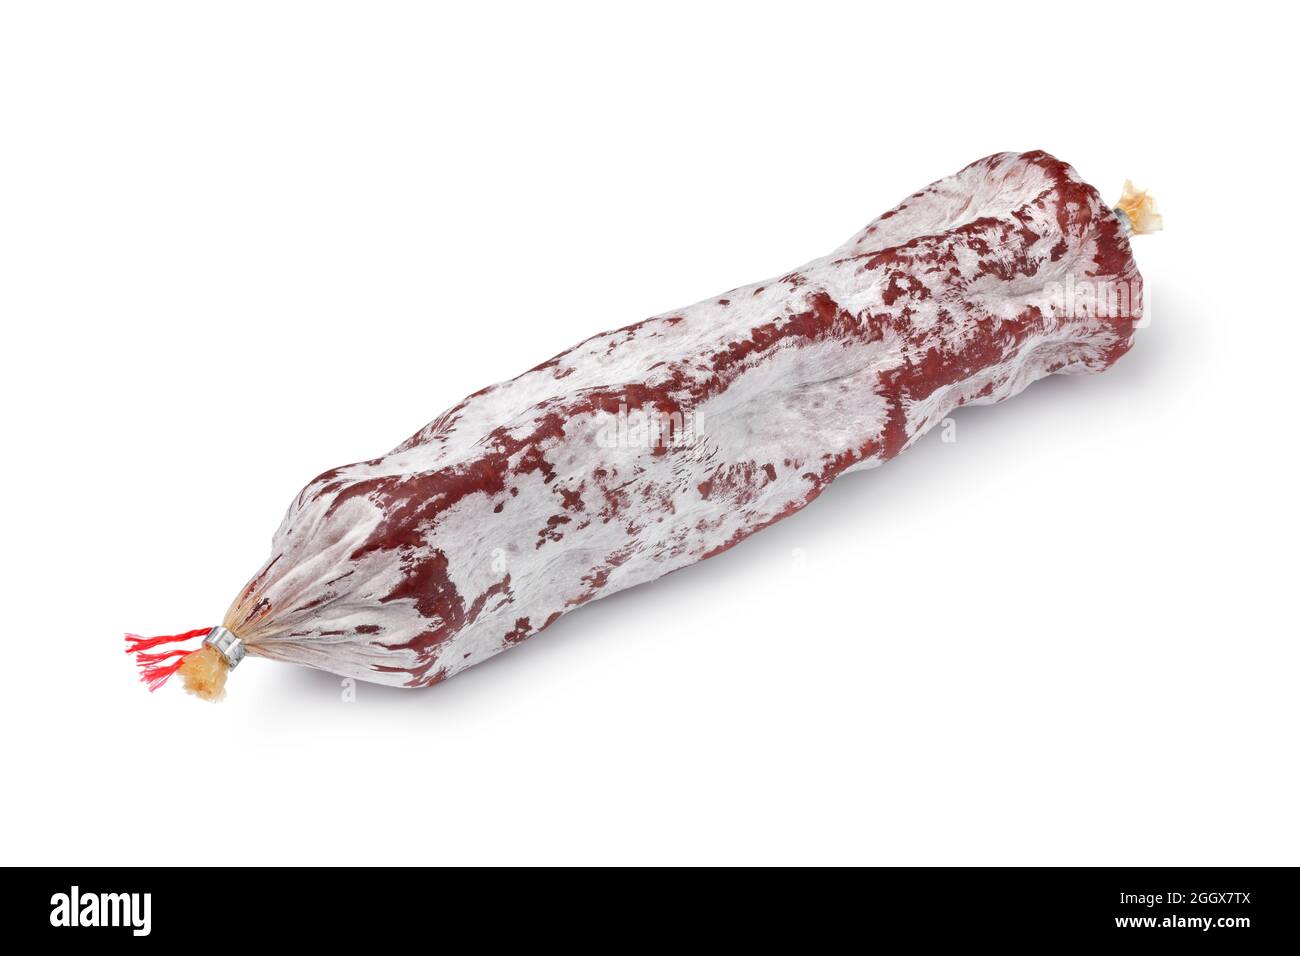 Pork sausage lyon hi-res stock photography and images - Alamy